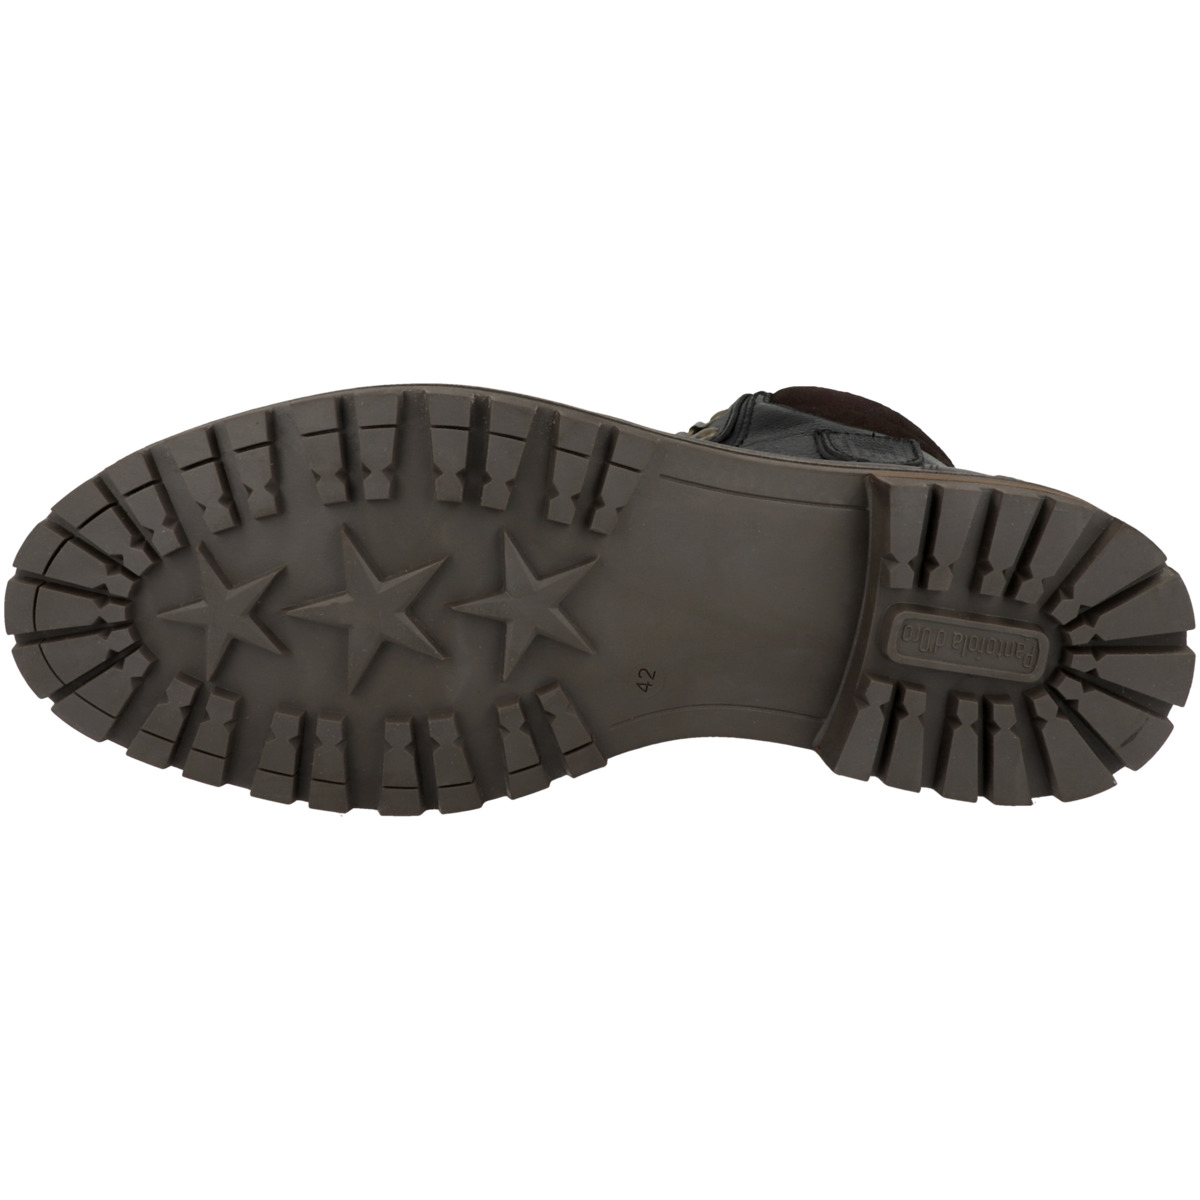 Pantofola d Oro Massi Uomo High Boots schwarz